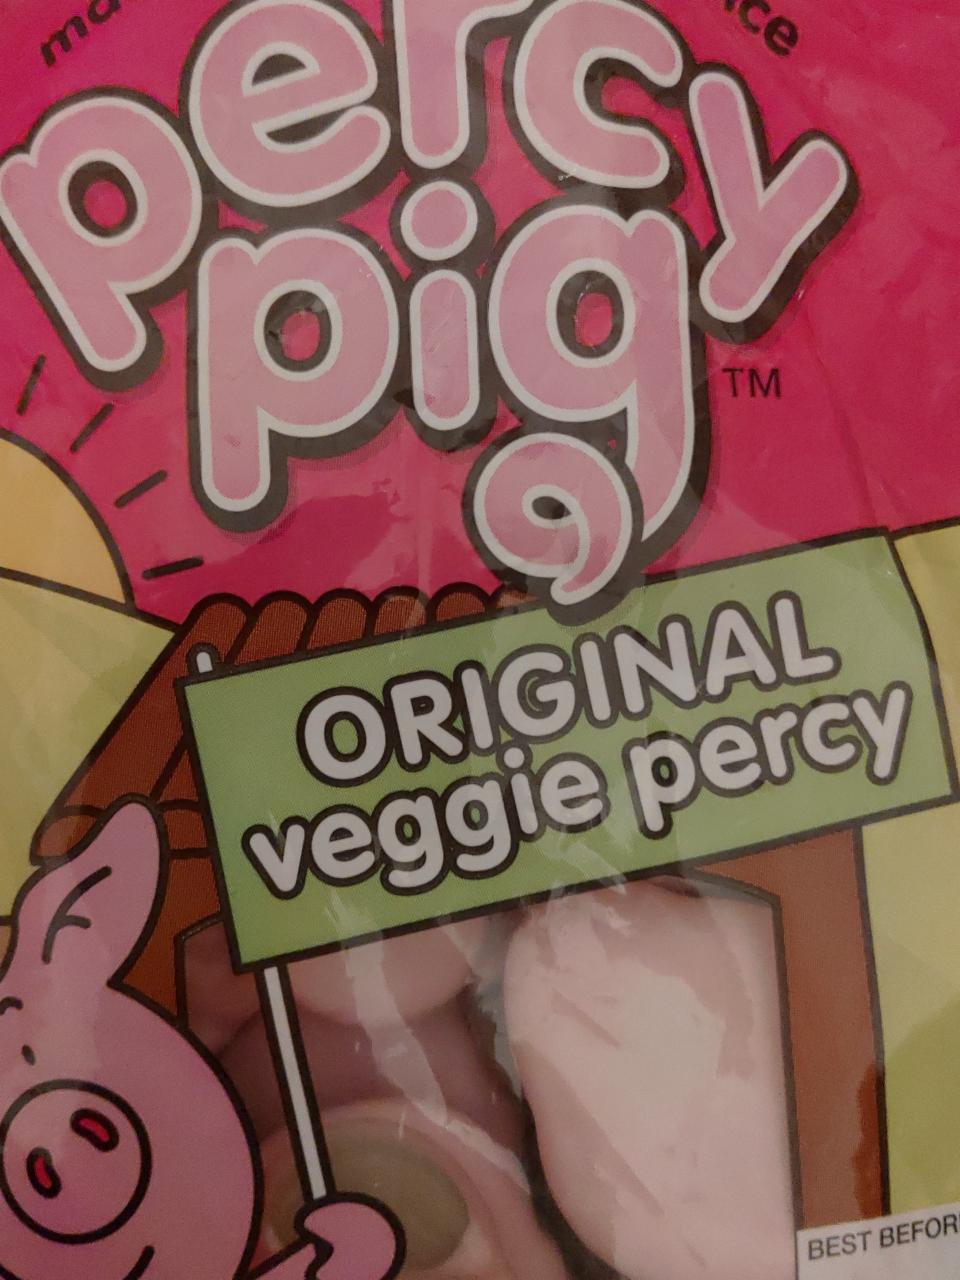 Fotografie - Percy pig Original veggie percy M&S Food